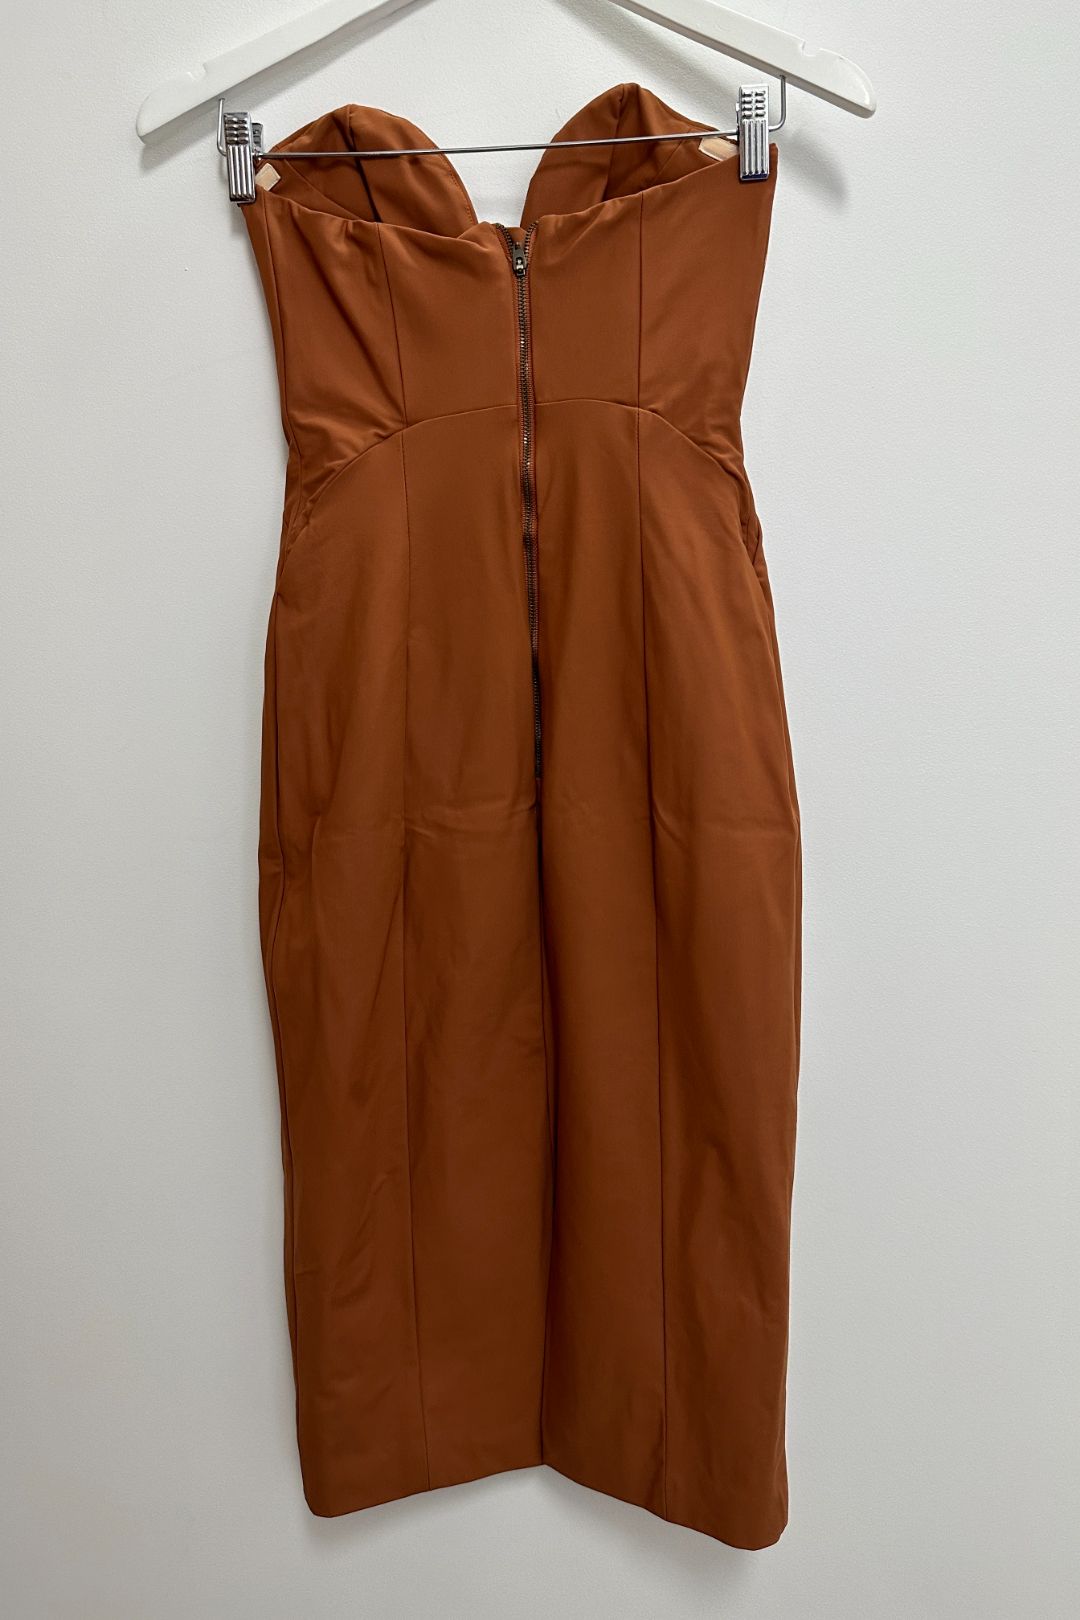 Kookai Marnie Midi Dress in Copper